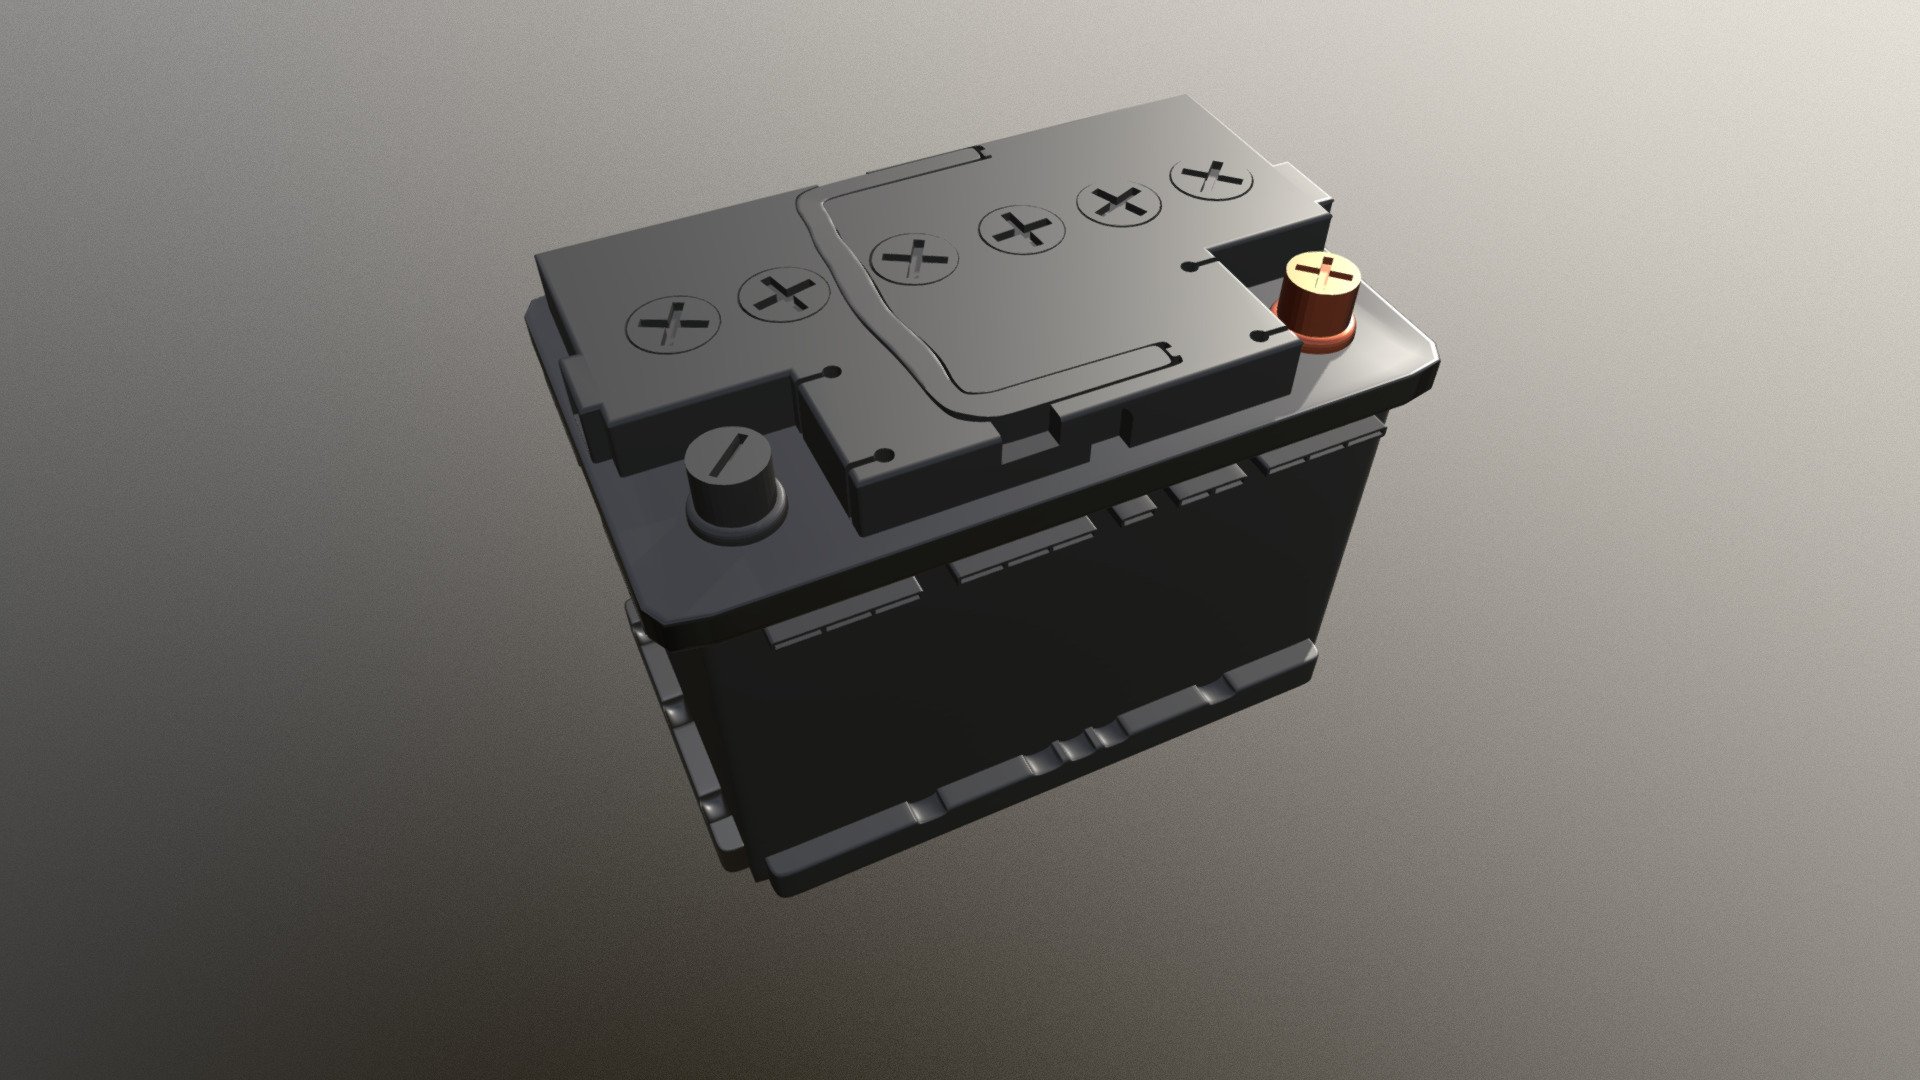 Battery 3. Interscol АКБ 3d model. Car Battery 3d model. DJI Mini 3 Battery 3d model. Deco 3d модель аккумулятор.